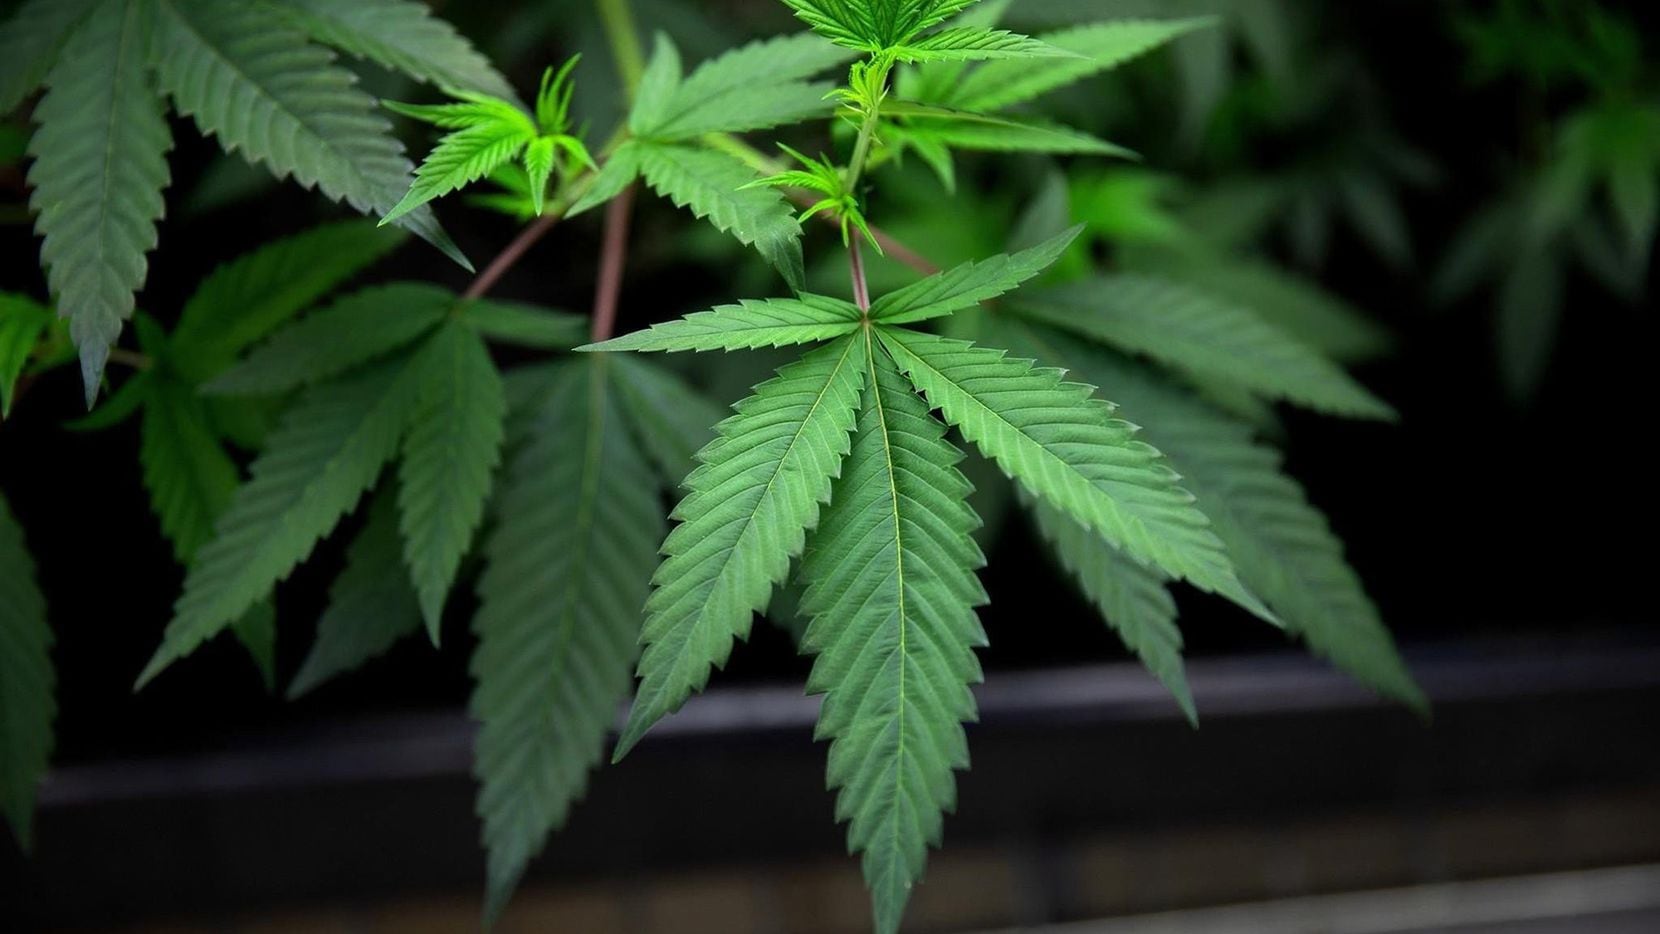 Marijuana plants grow under lights at Cresco Labs medical marijuana cultivation facility Aug. 8, 2018, in Joliet, Ill. (Erin Hooley/Chicago Tribune/TNS)